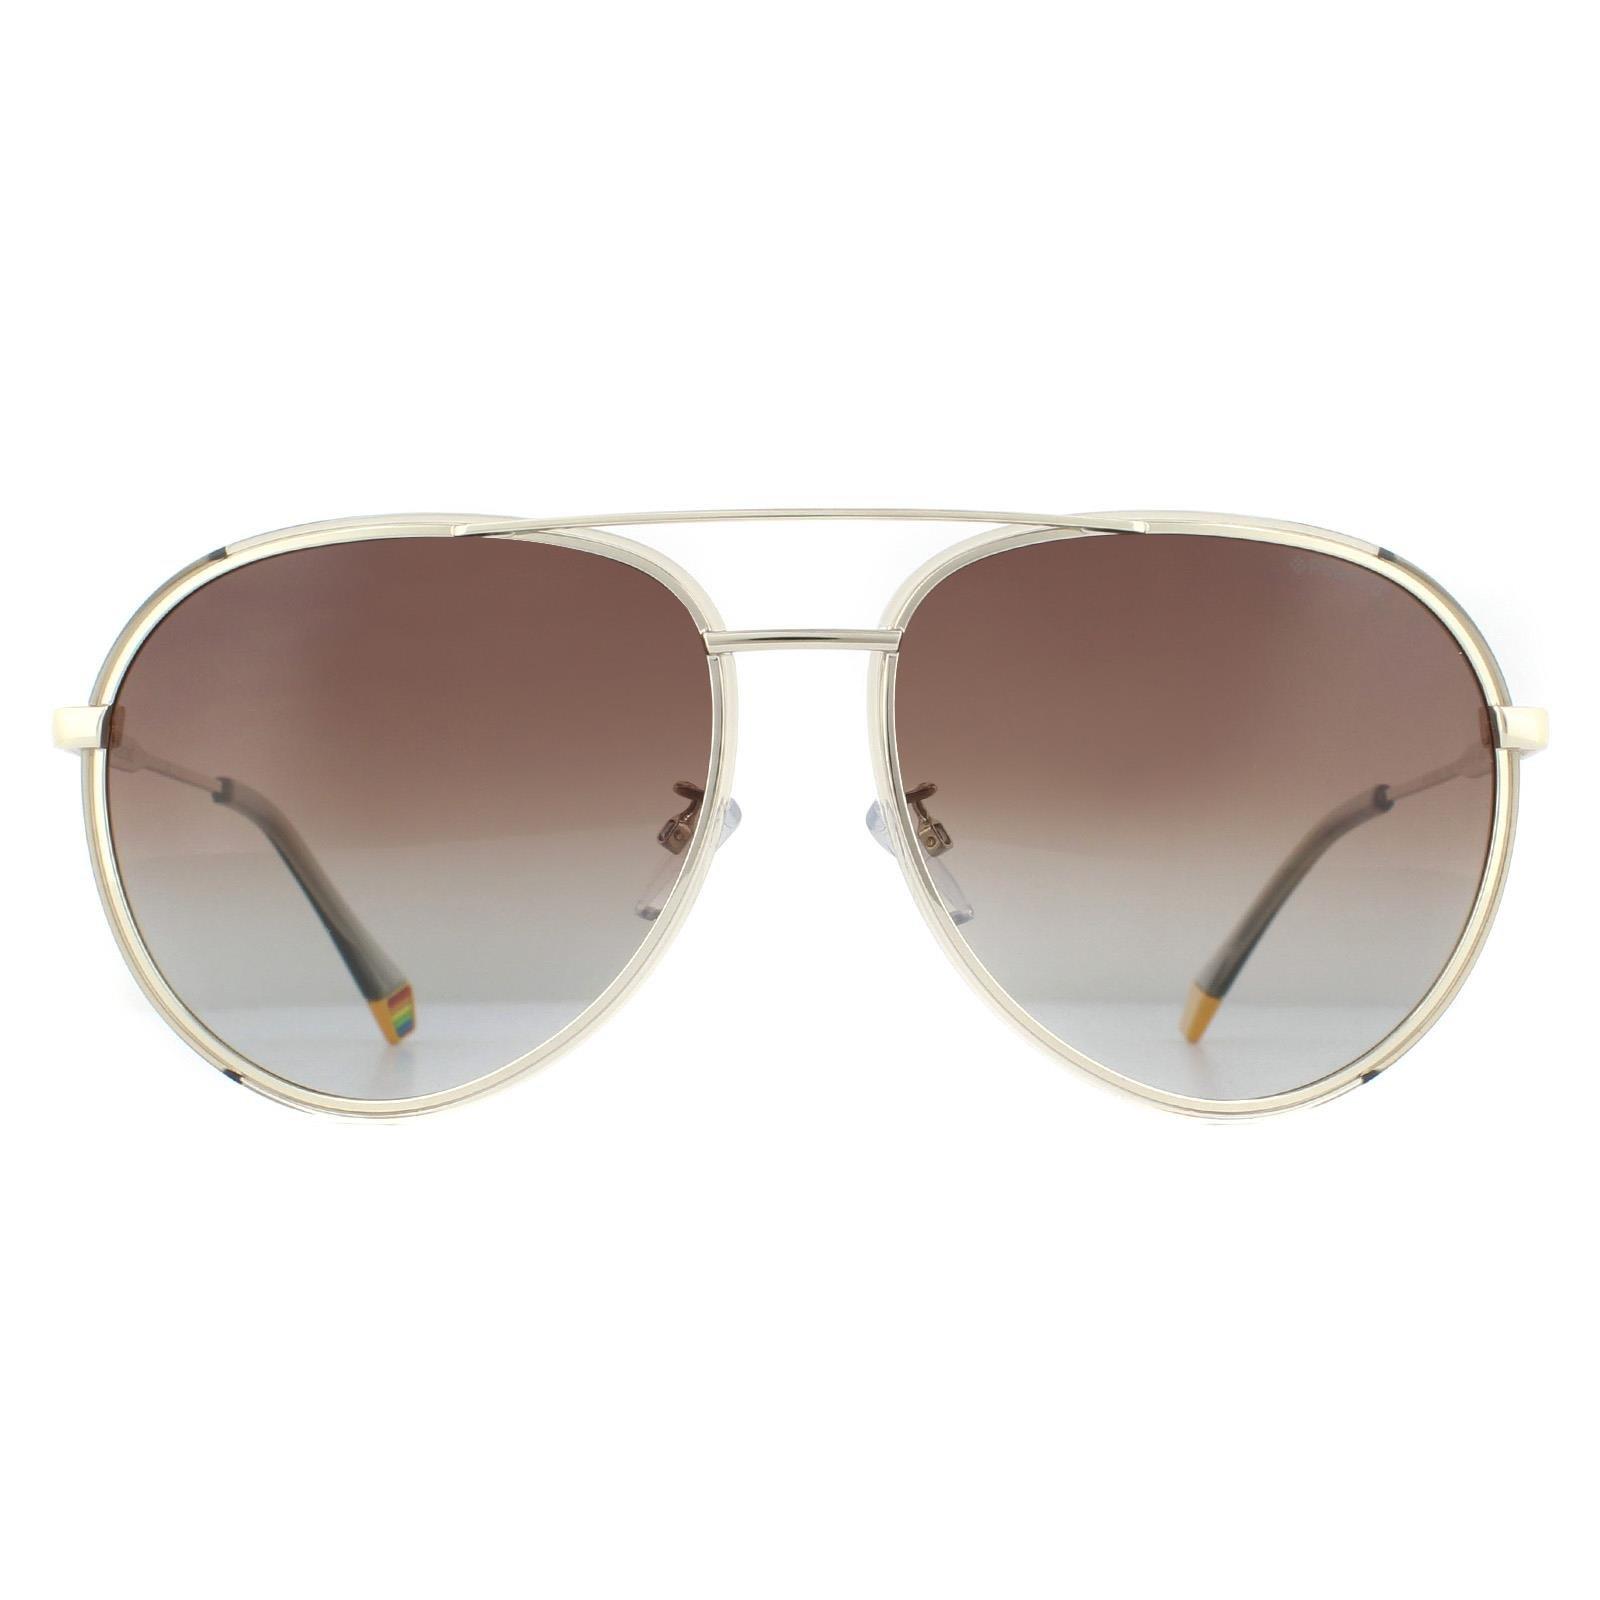 Sunglasses | Aviator Gold Beige Brown Gradient Polarized Sunglasses ...